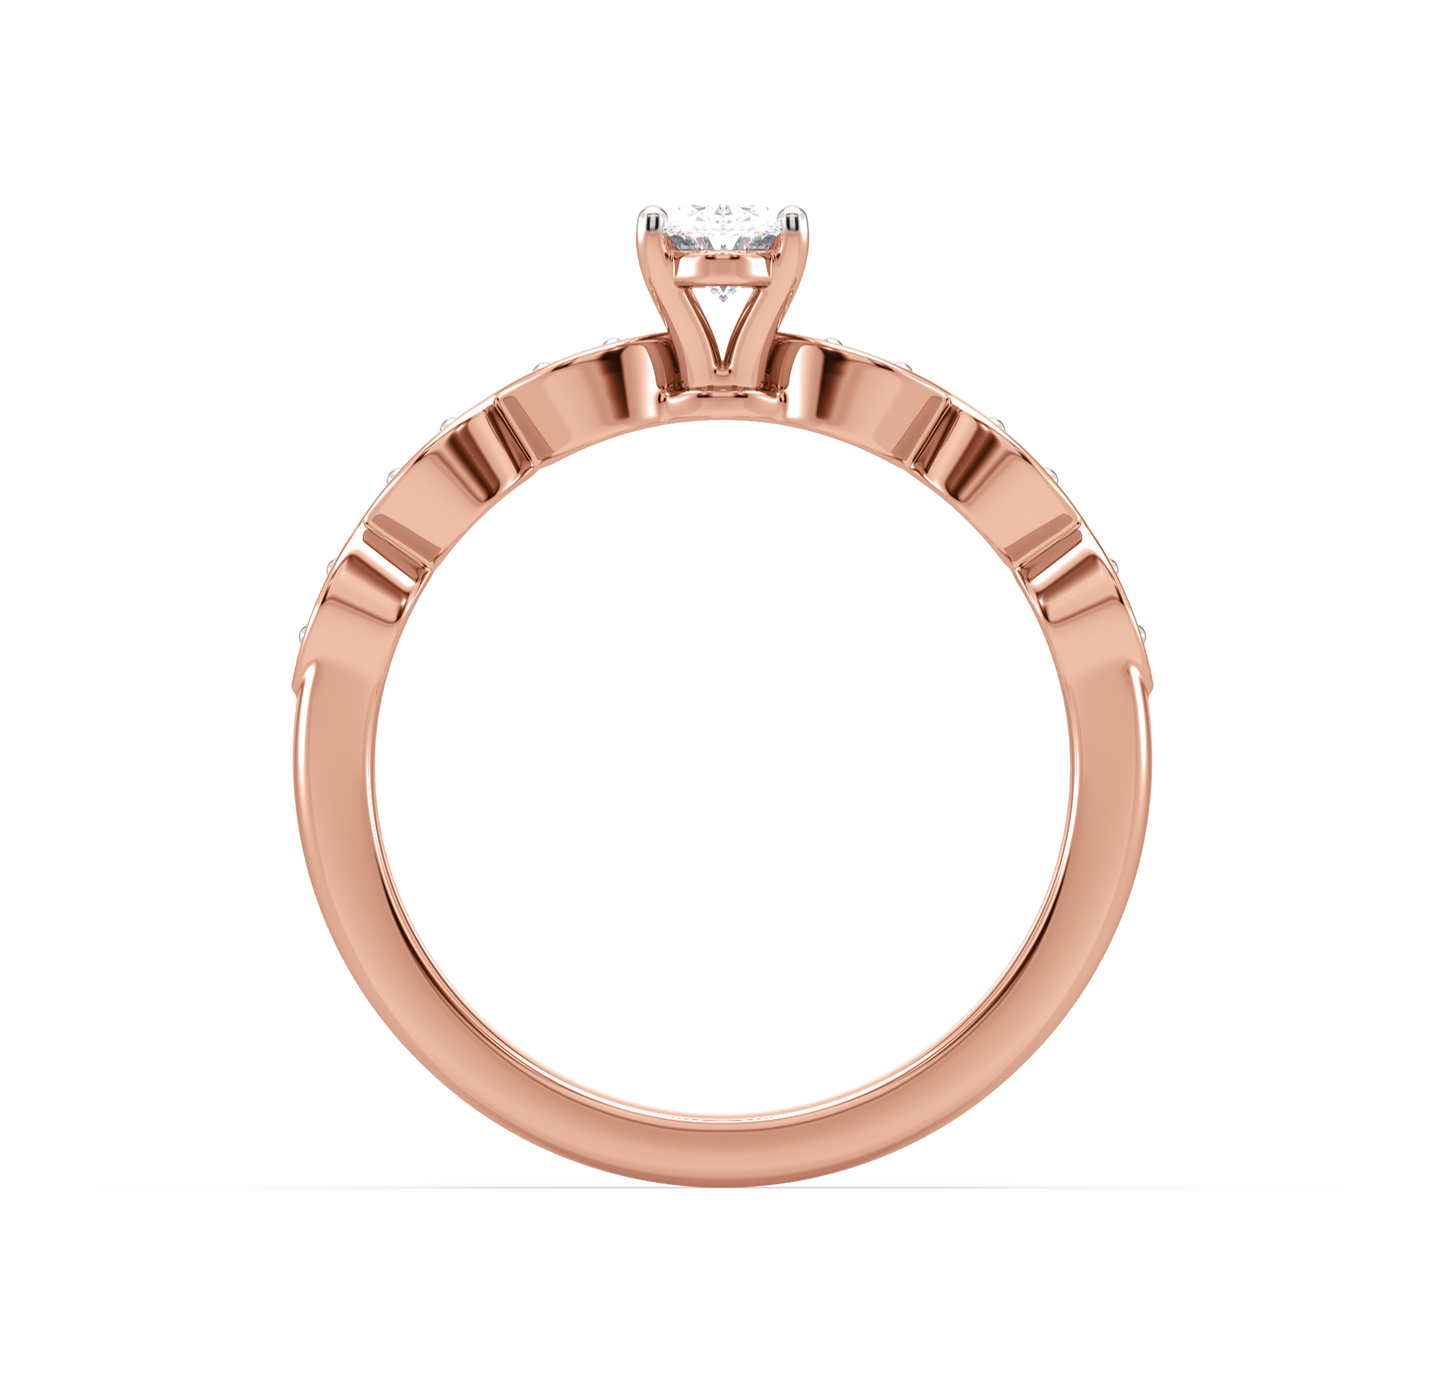 Customised ring RG21013-PH21020